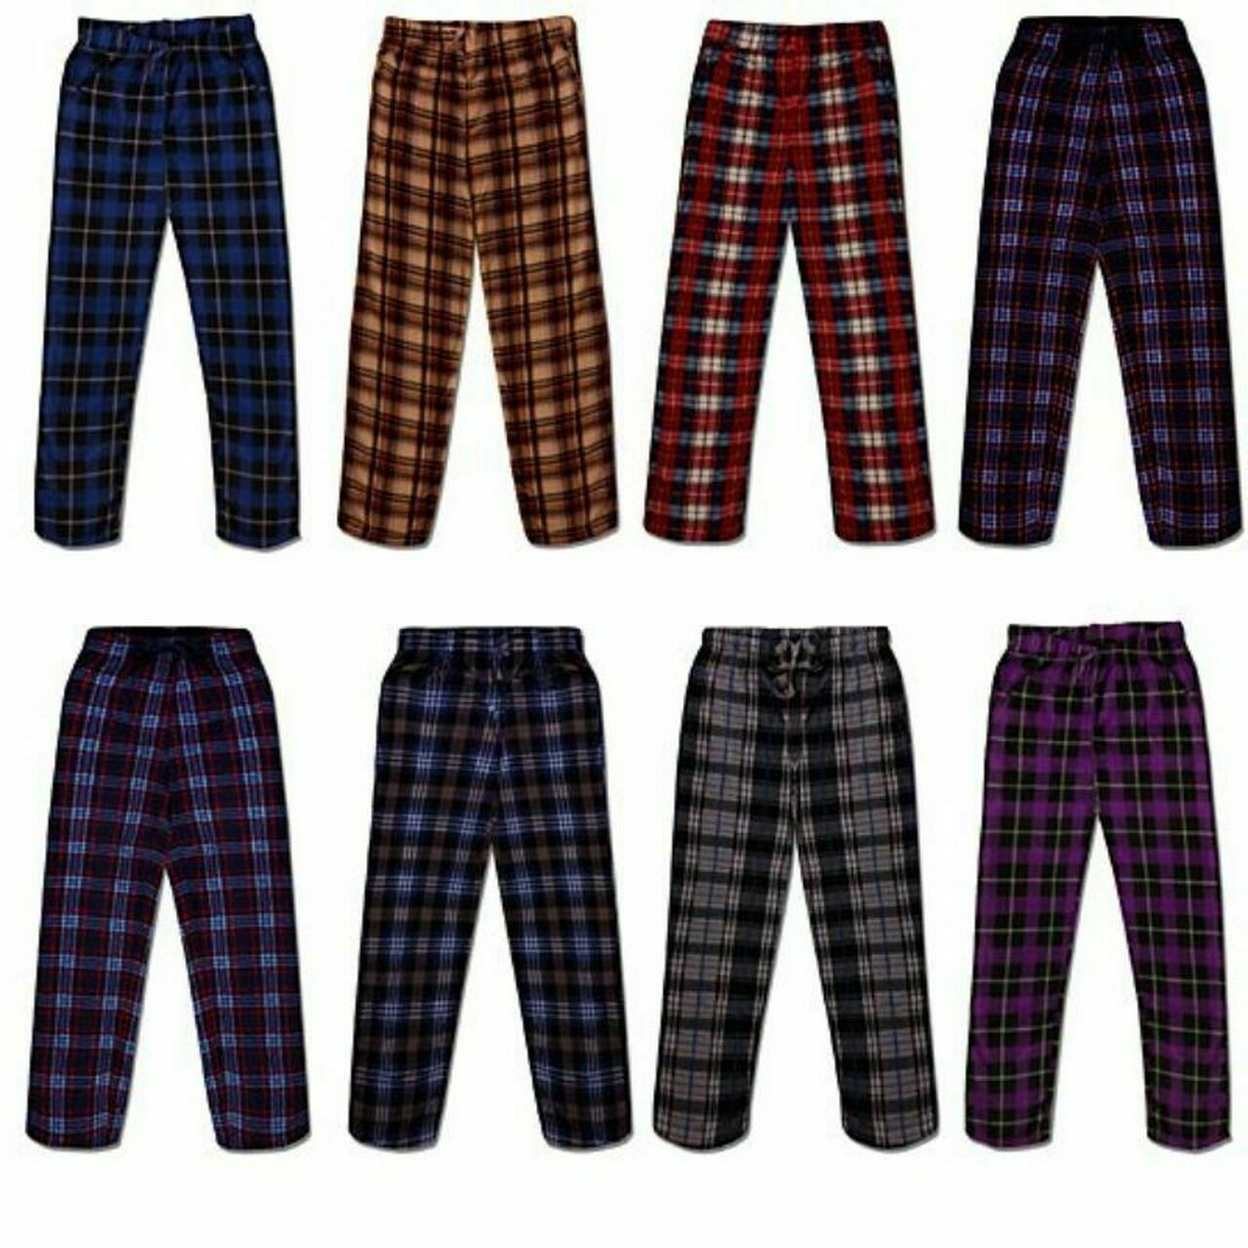 4-Pack: Men's Ultra Soft Cozy Flannel Fleece Plaid Pajama Sleep Bottom Lounge Pants - Large